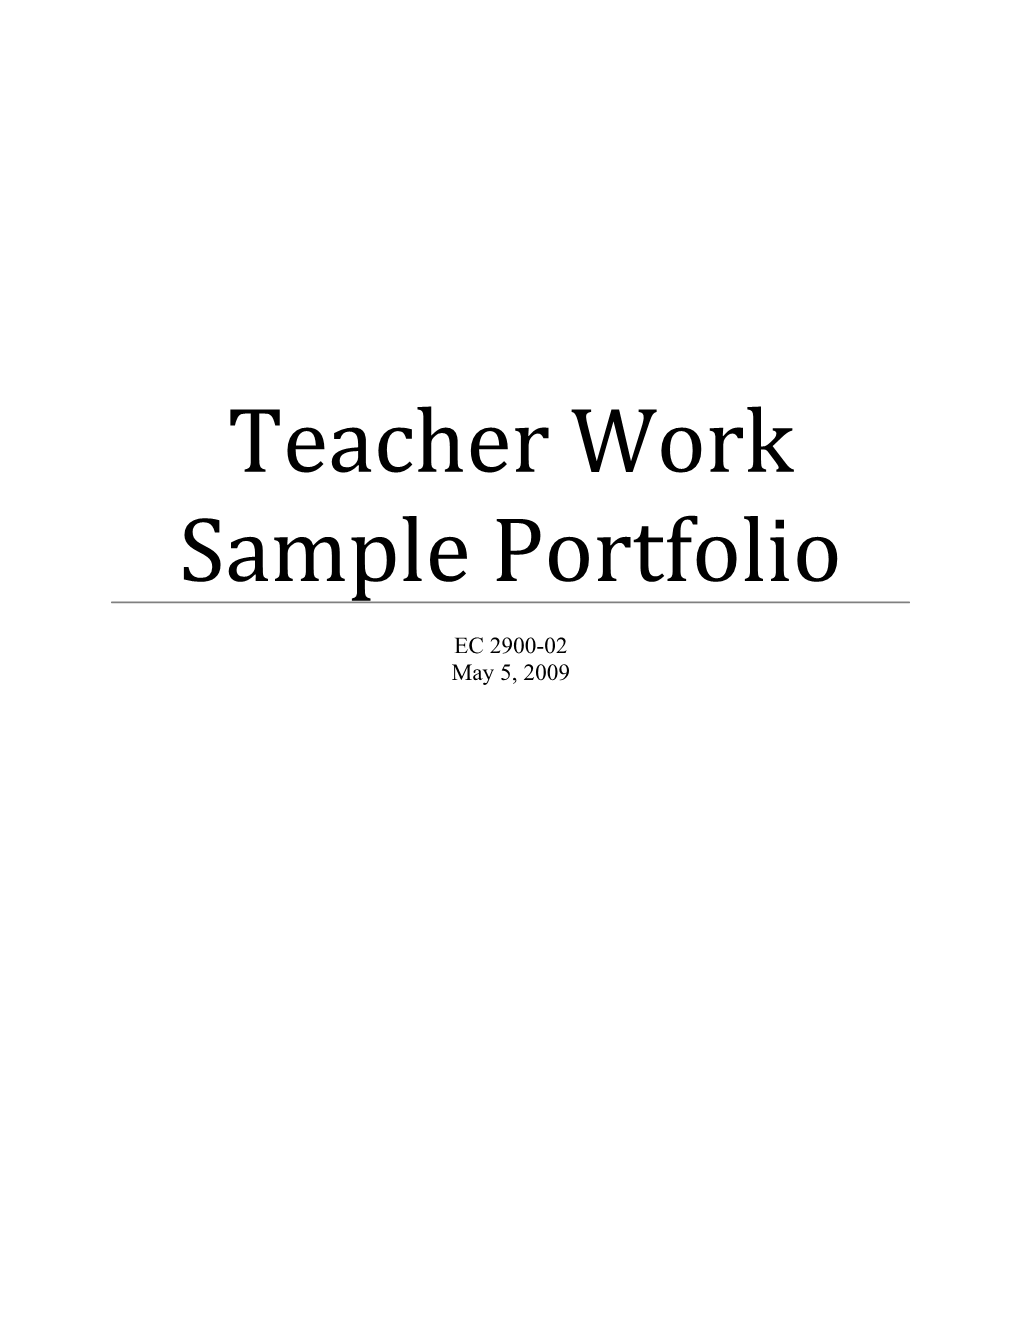 Teacher Work Sample Portfolio